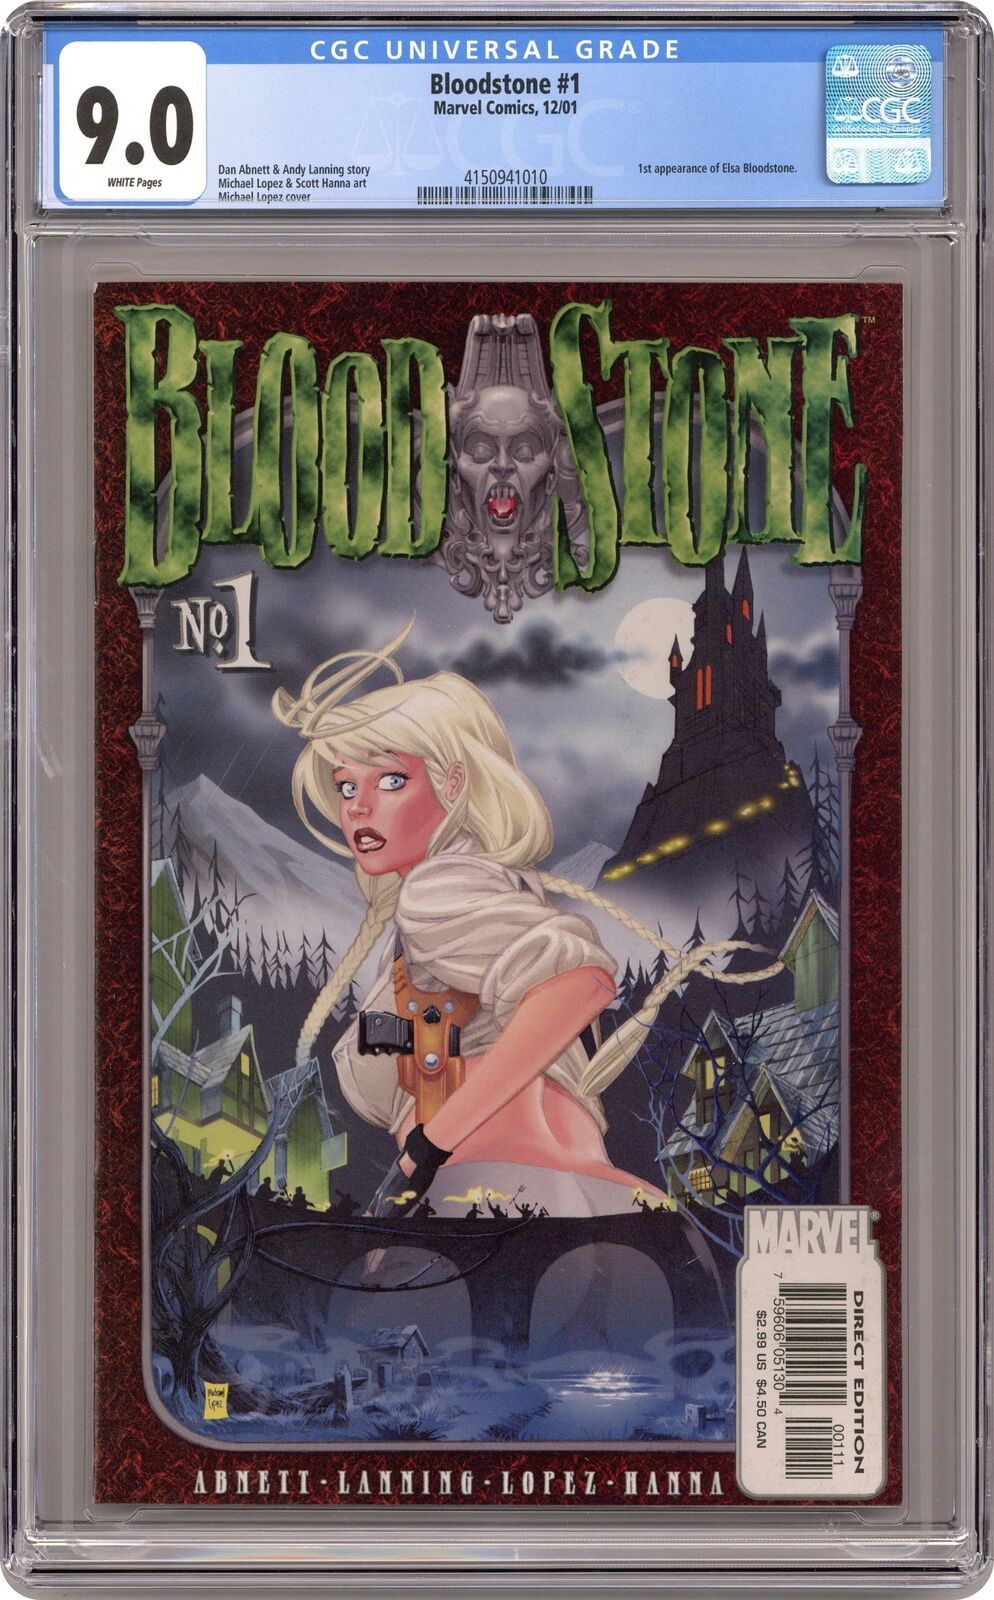 Bloodstone #1 CGC 9.0 2001 4150941010 1st app. Elsa Bloodstone